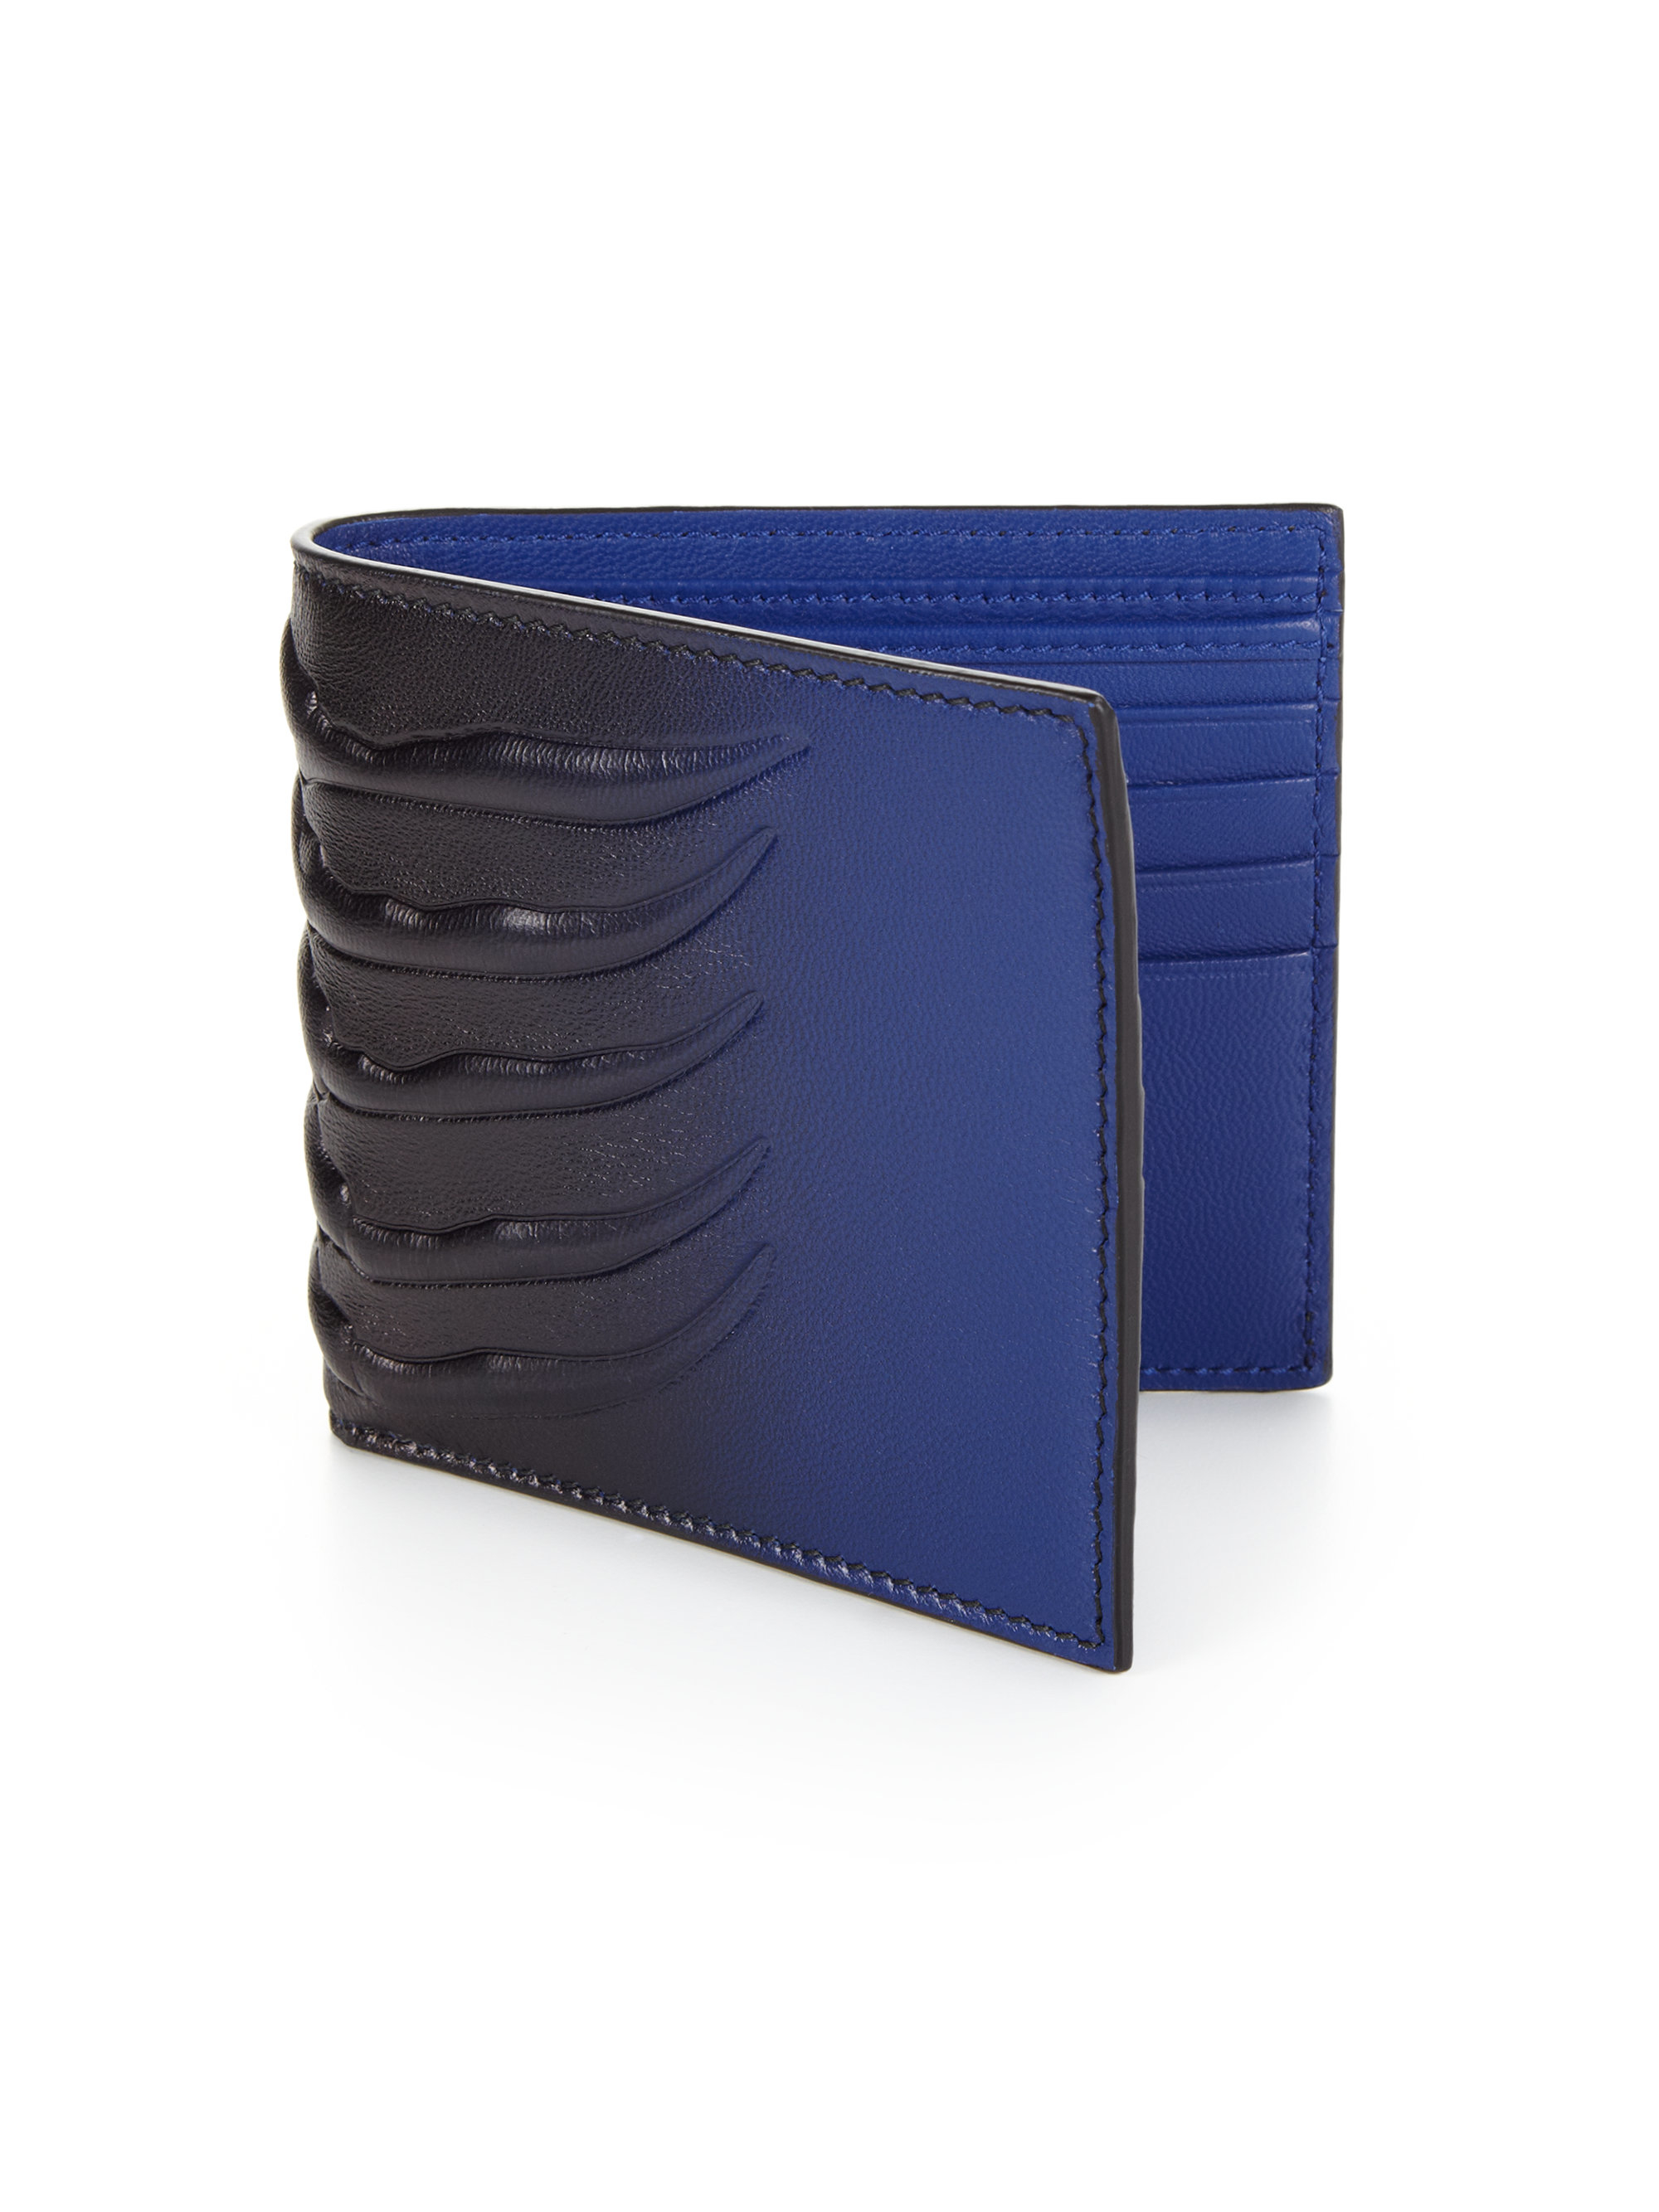 Lyst - Alexander McQueen Ombre Leather Billfold Wallet in Blue for Men